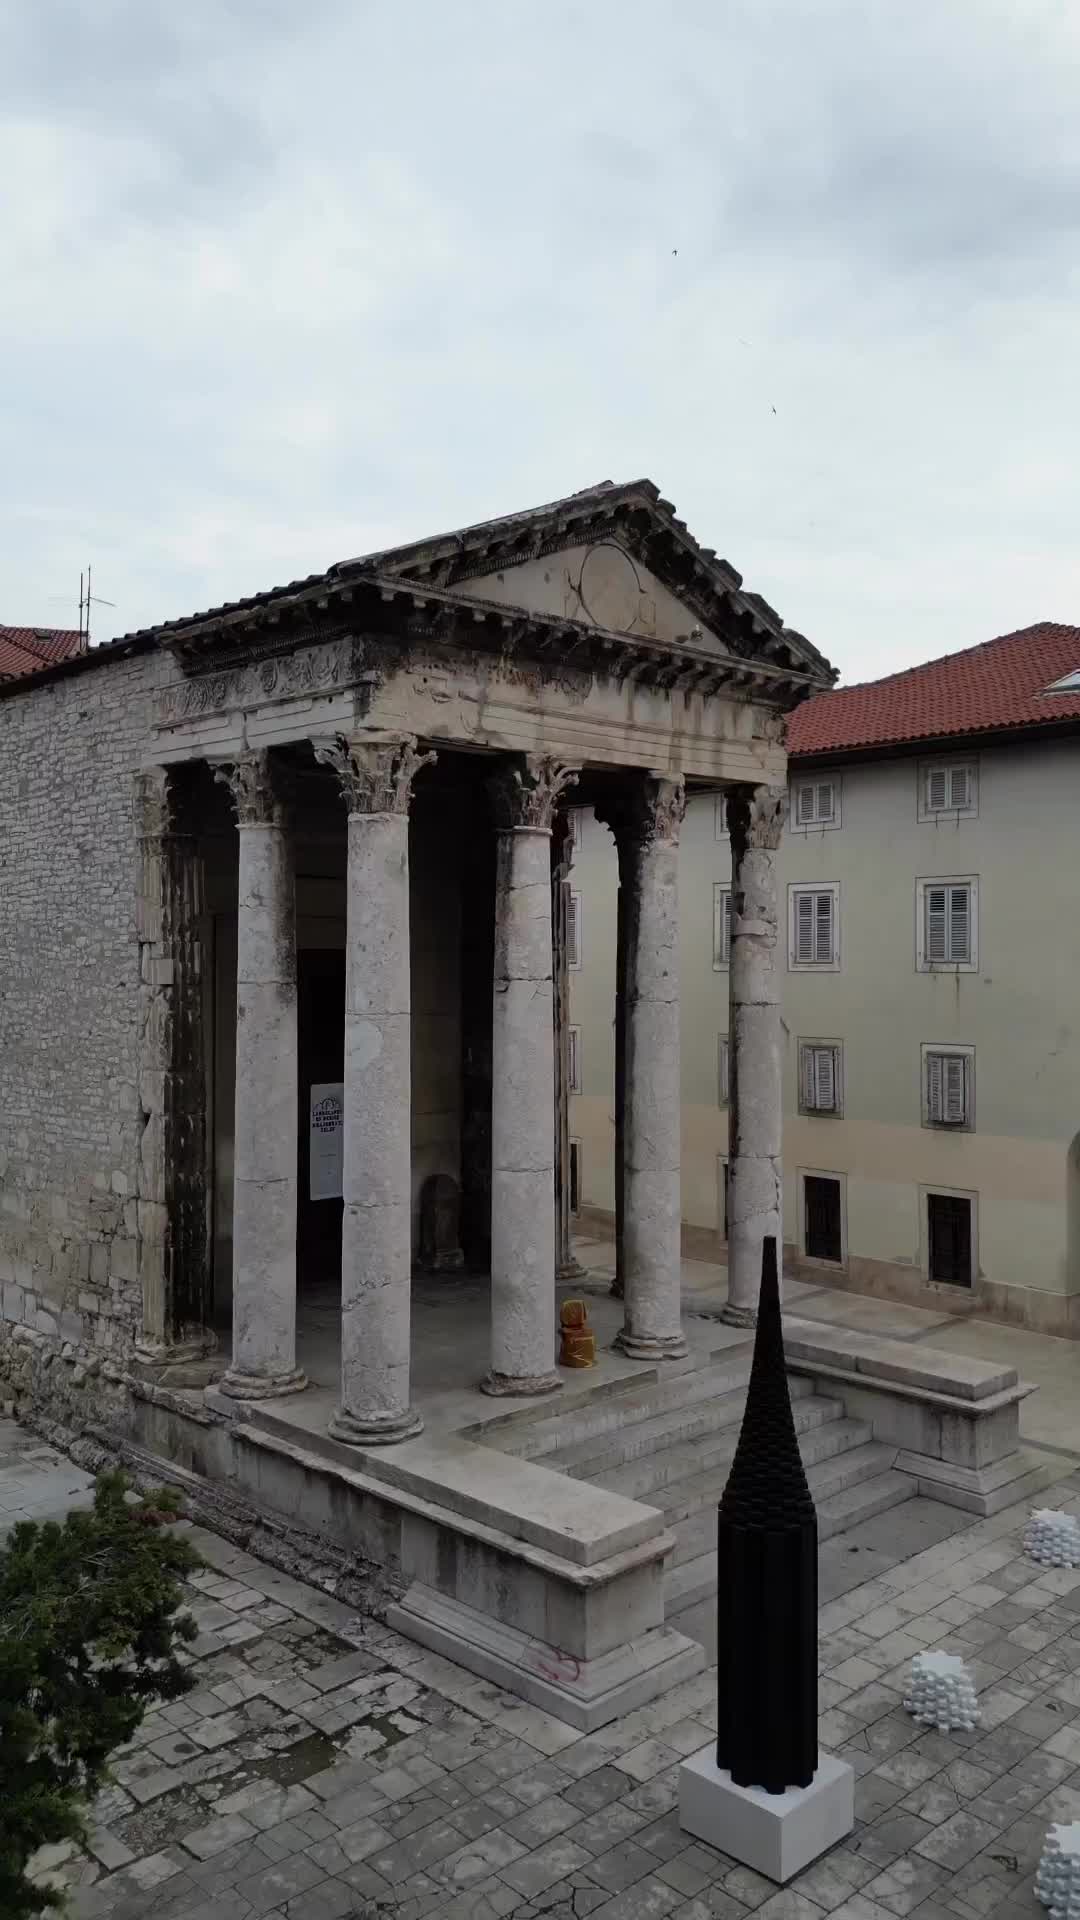 Discover Pula, Croatia: Drone Tour & Ancient Architecture